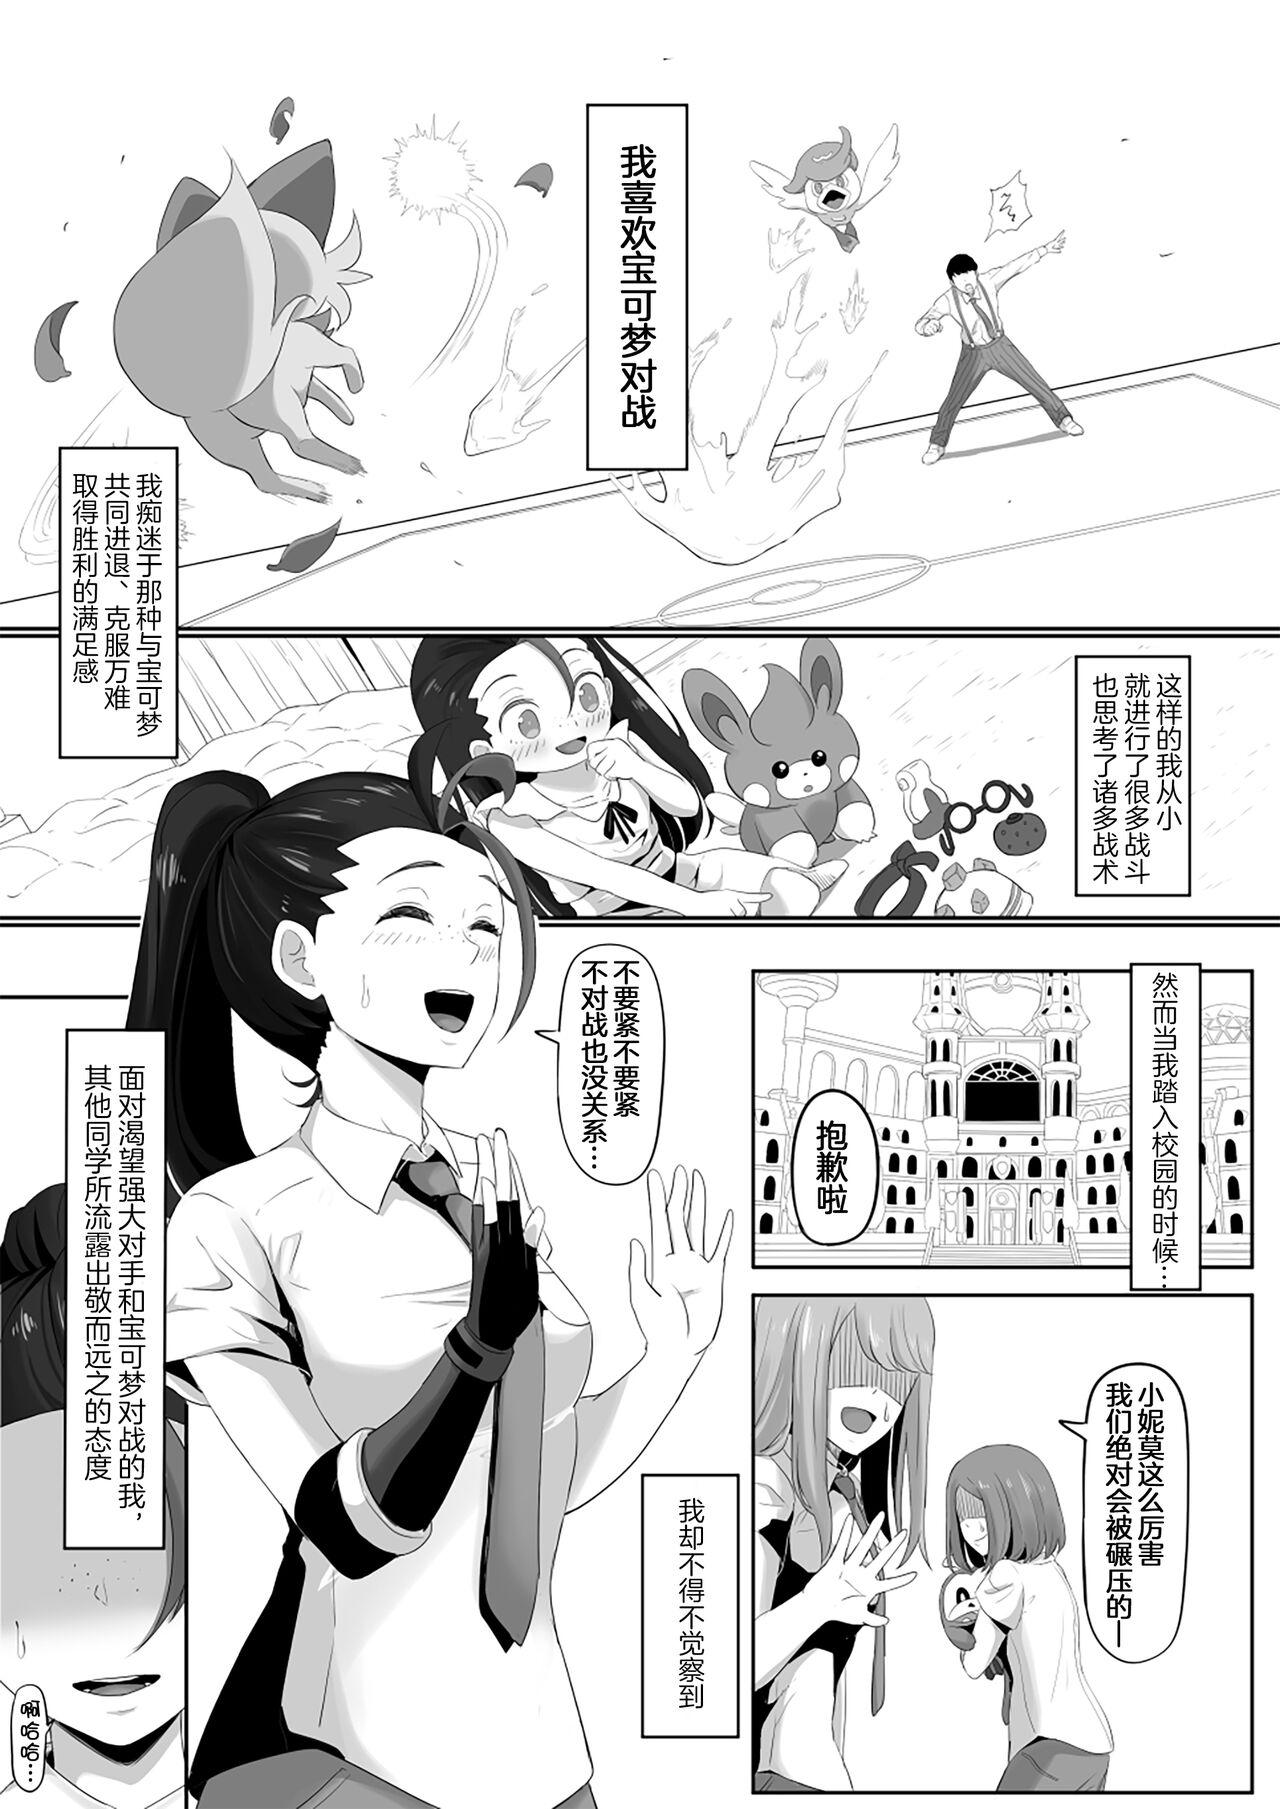 Guyonshemale Nemona's Ero Manga | 成为我独一无二的劲敌可以吗 - Pokemon | pocket monsters Spycam - Page 2